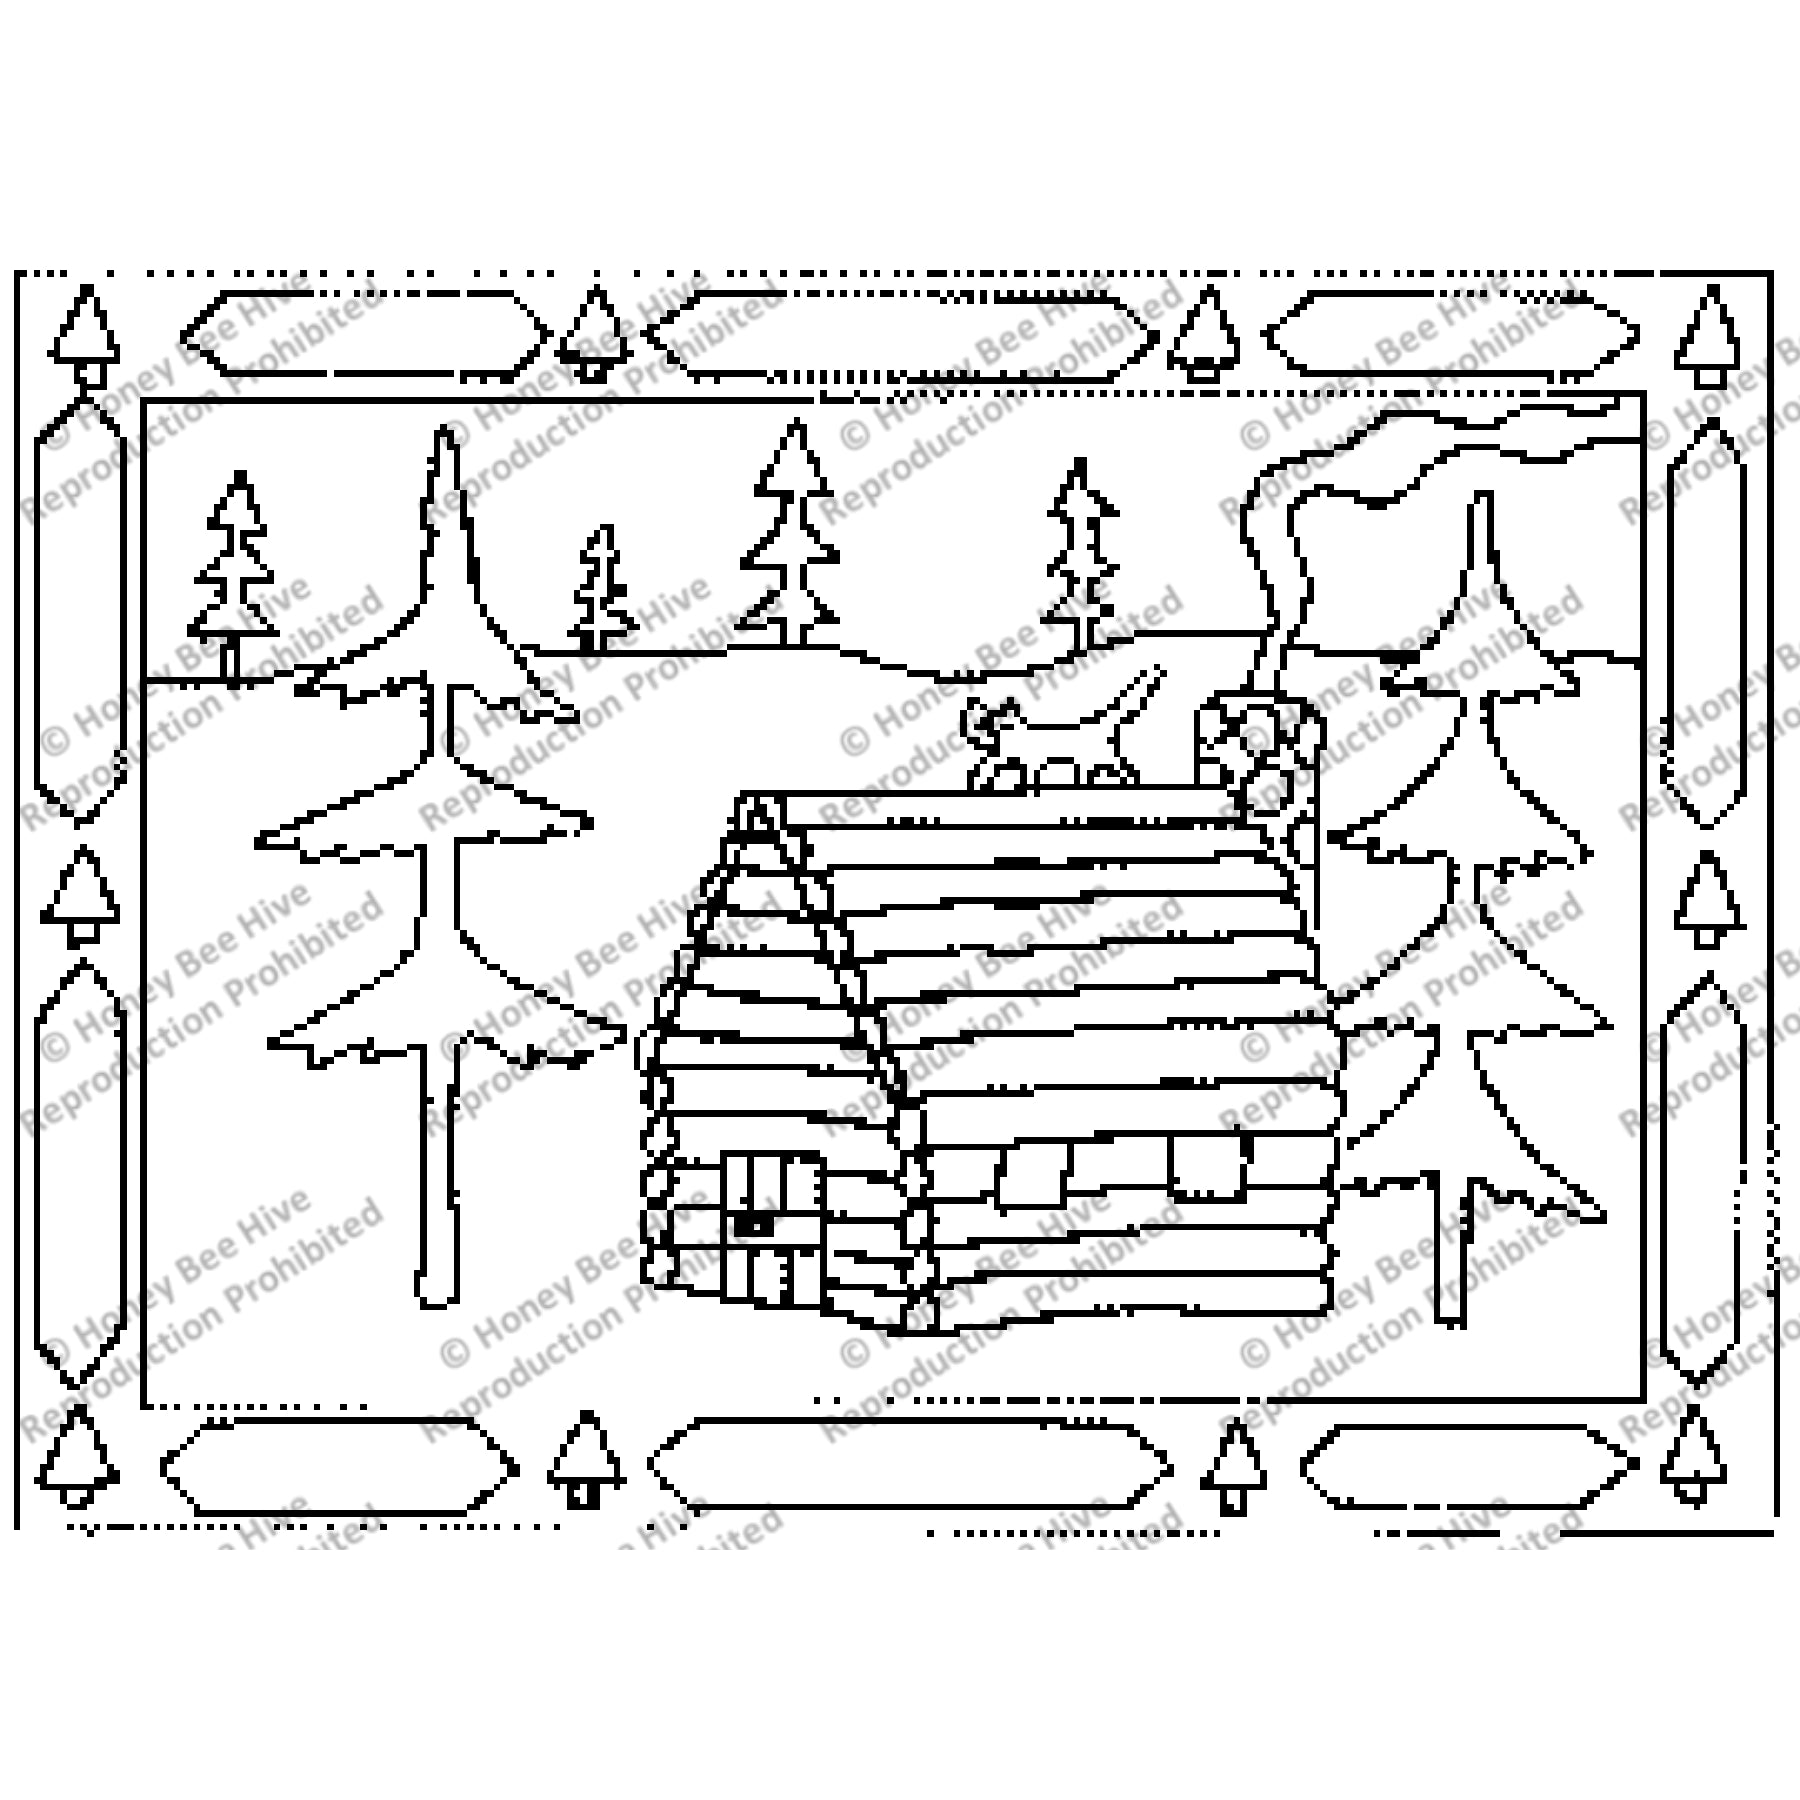 Log Cabin, rug hooking pattern